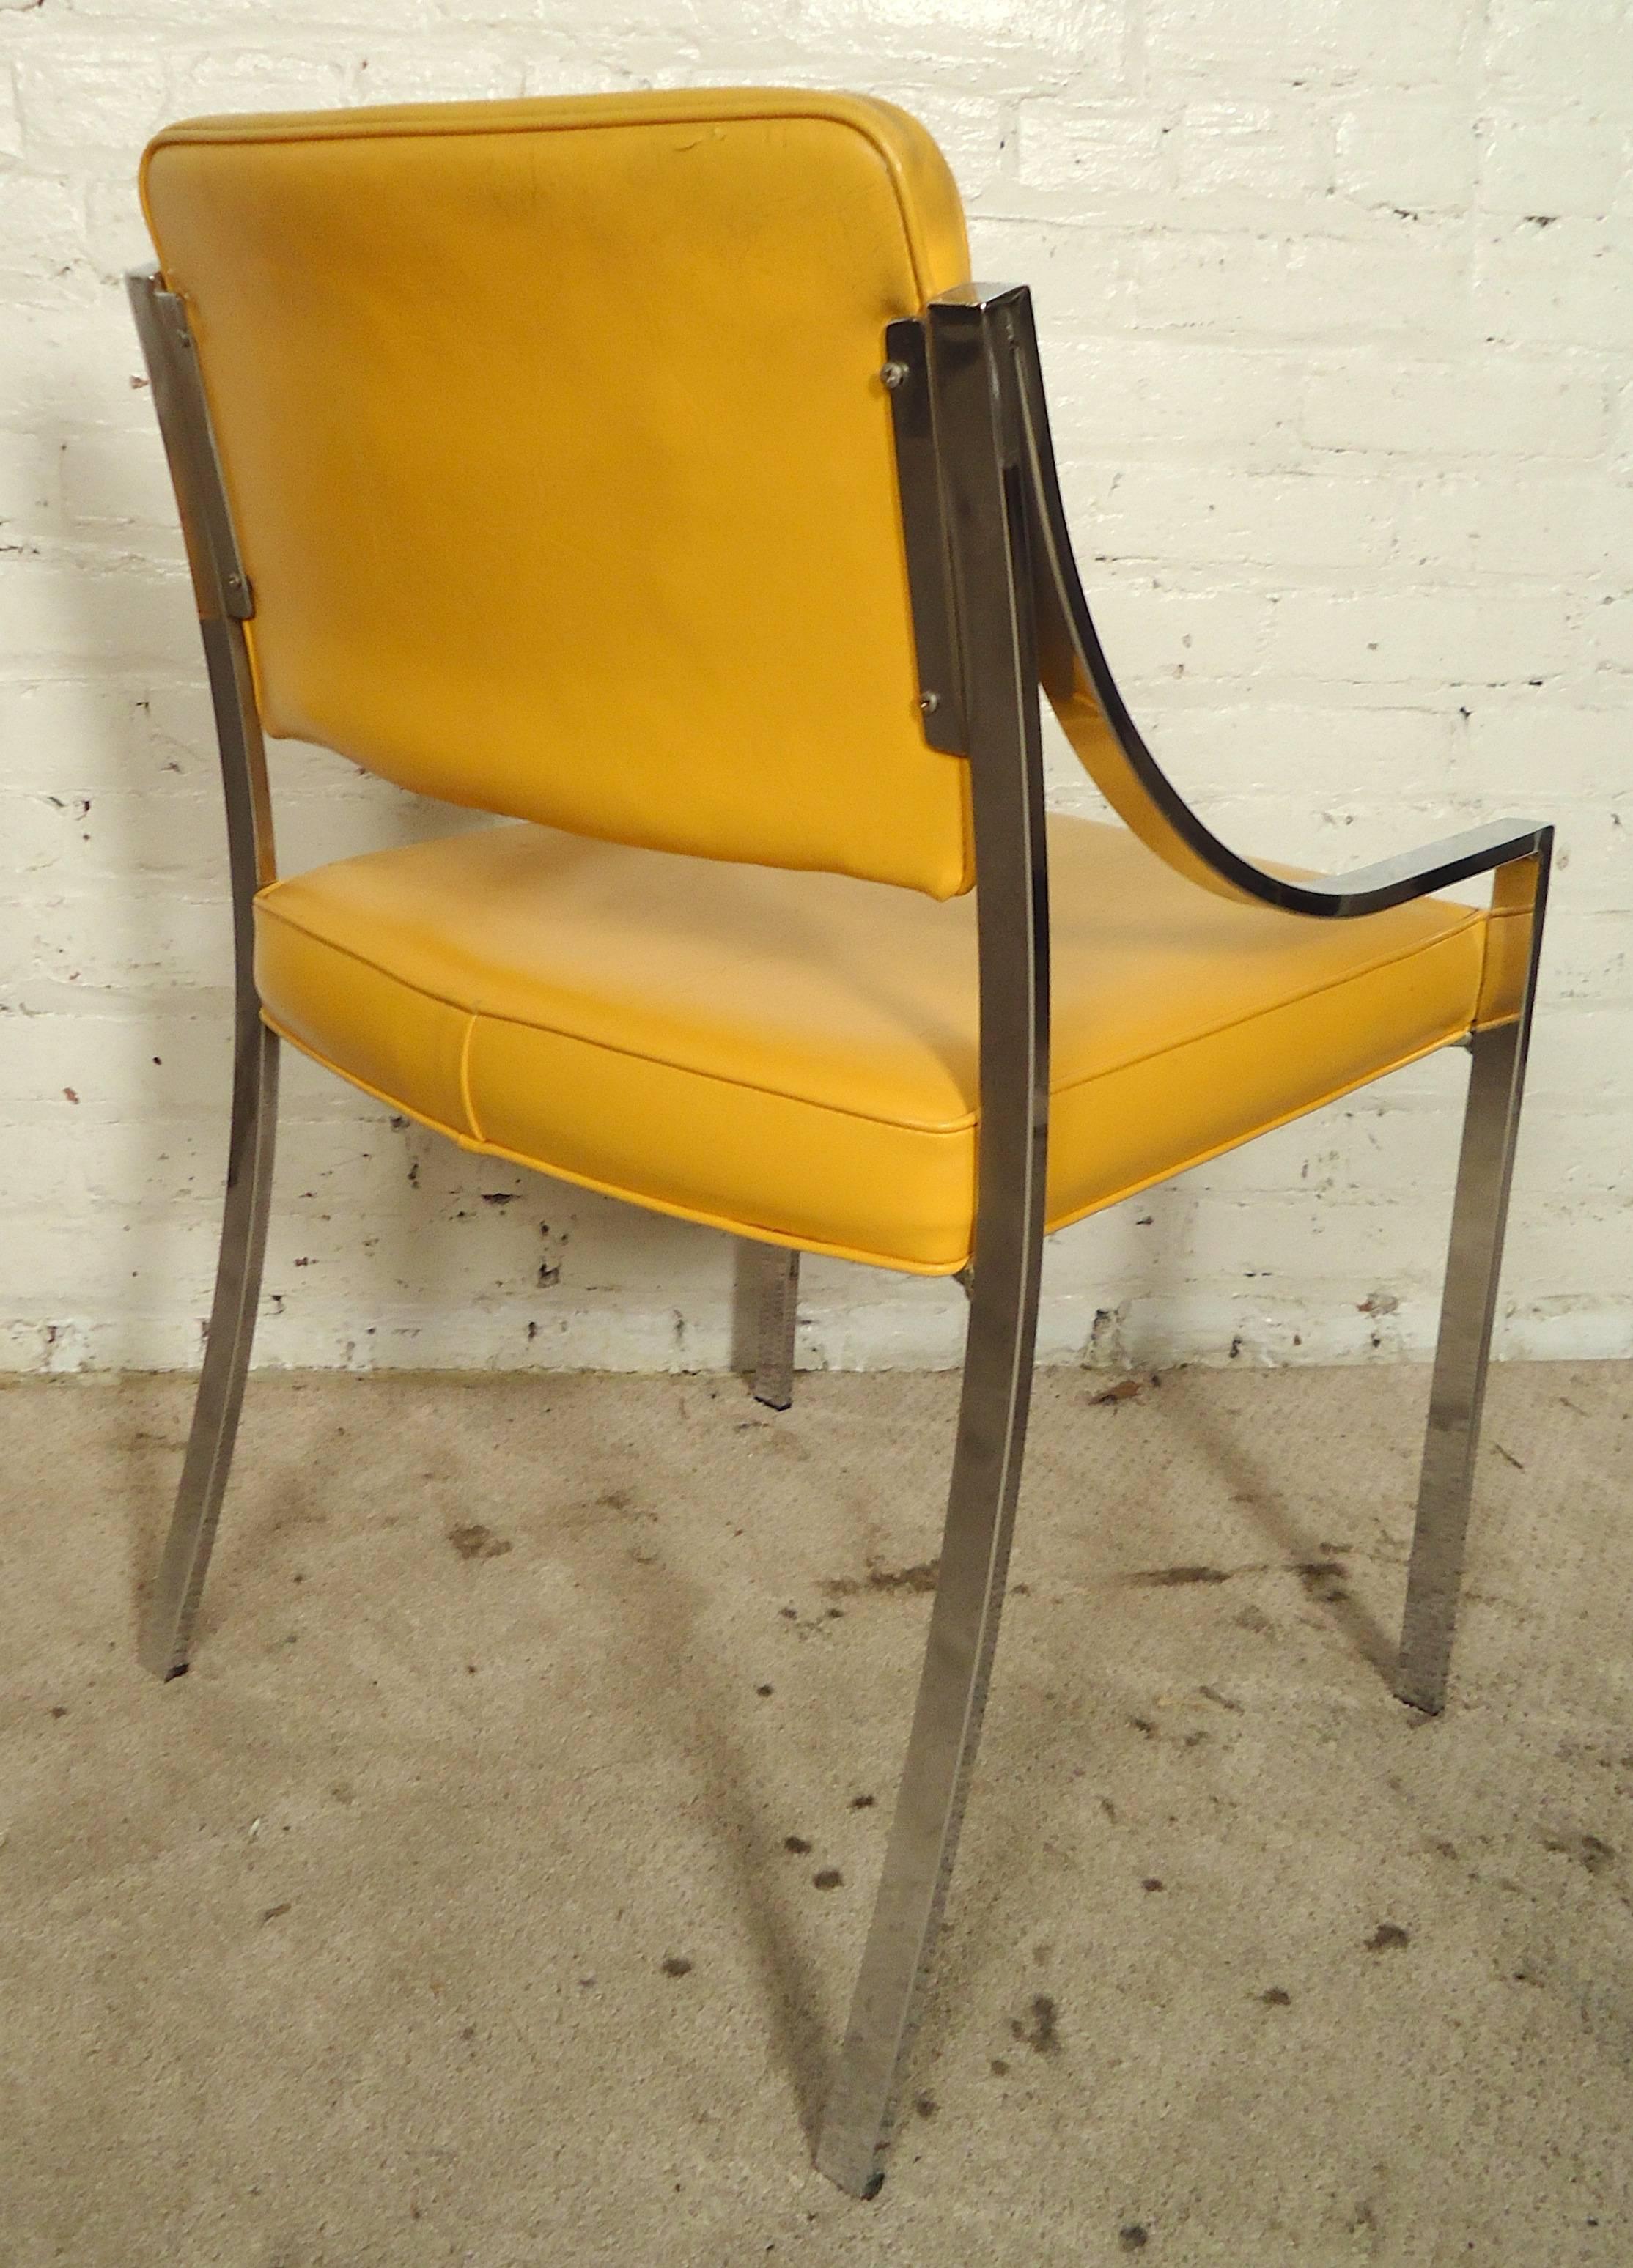 Mid-20th Century Sleek Midcentury Polished Chairs